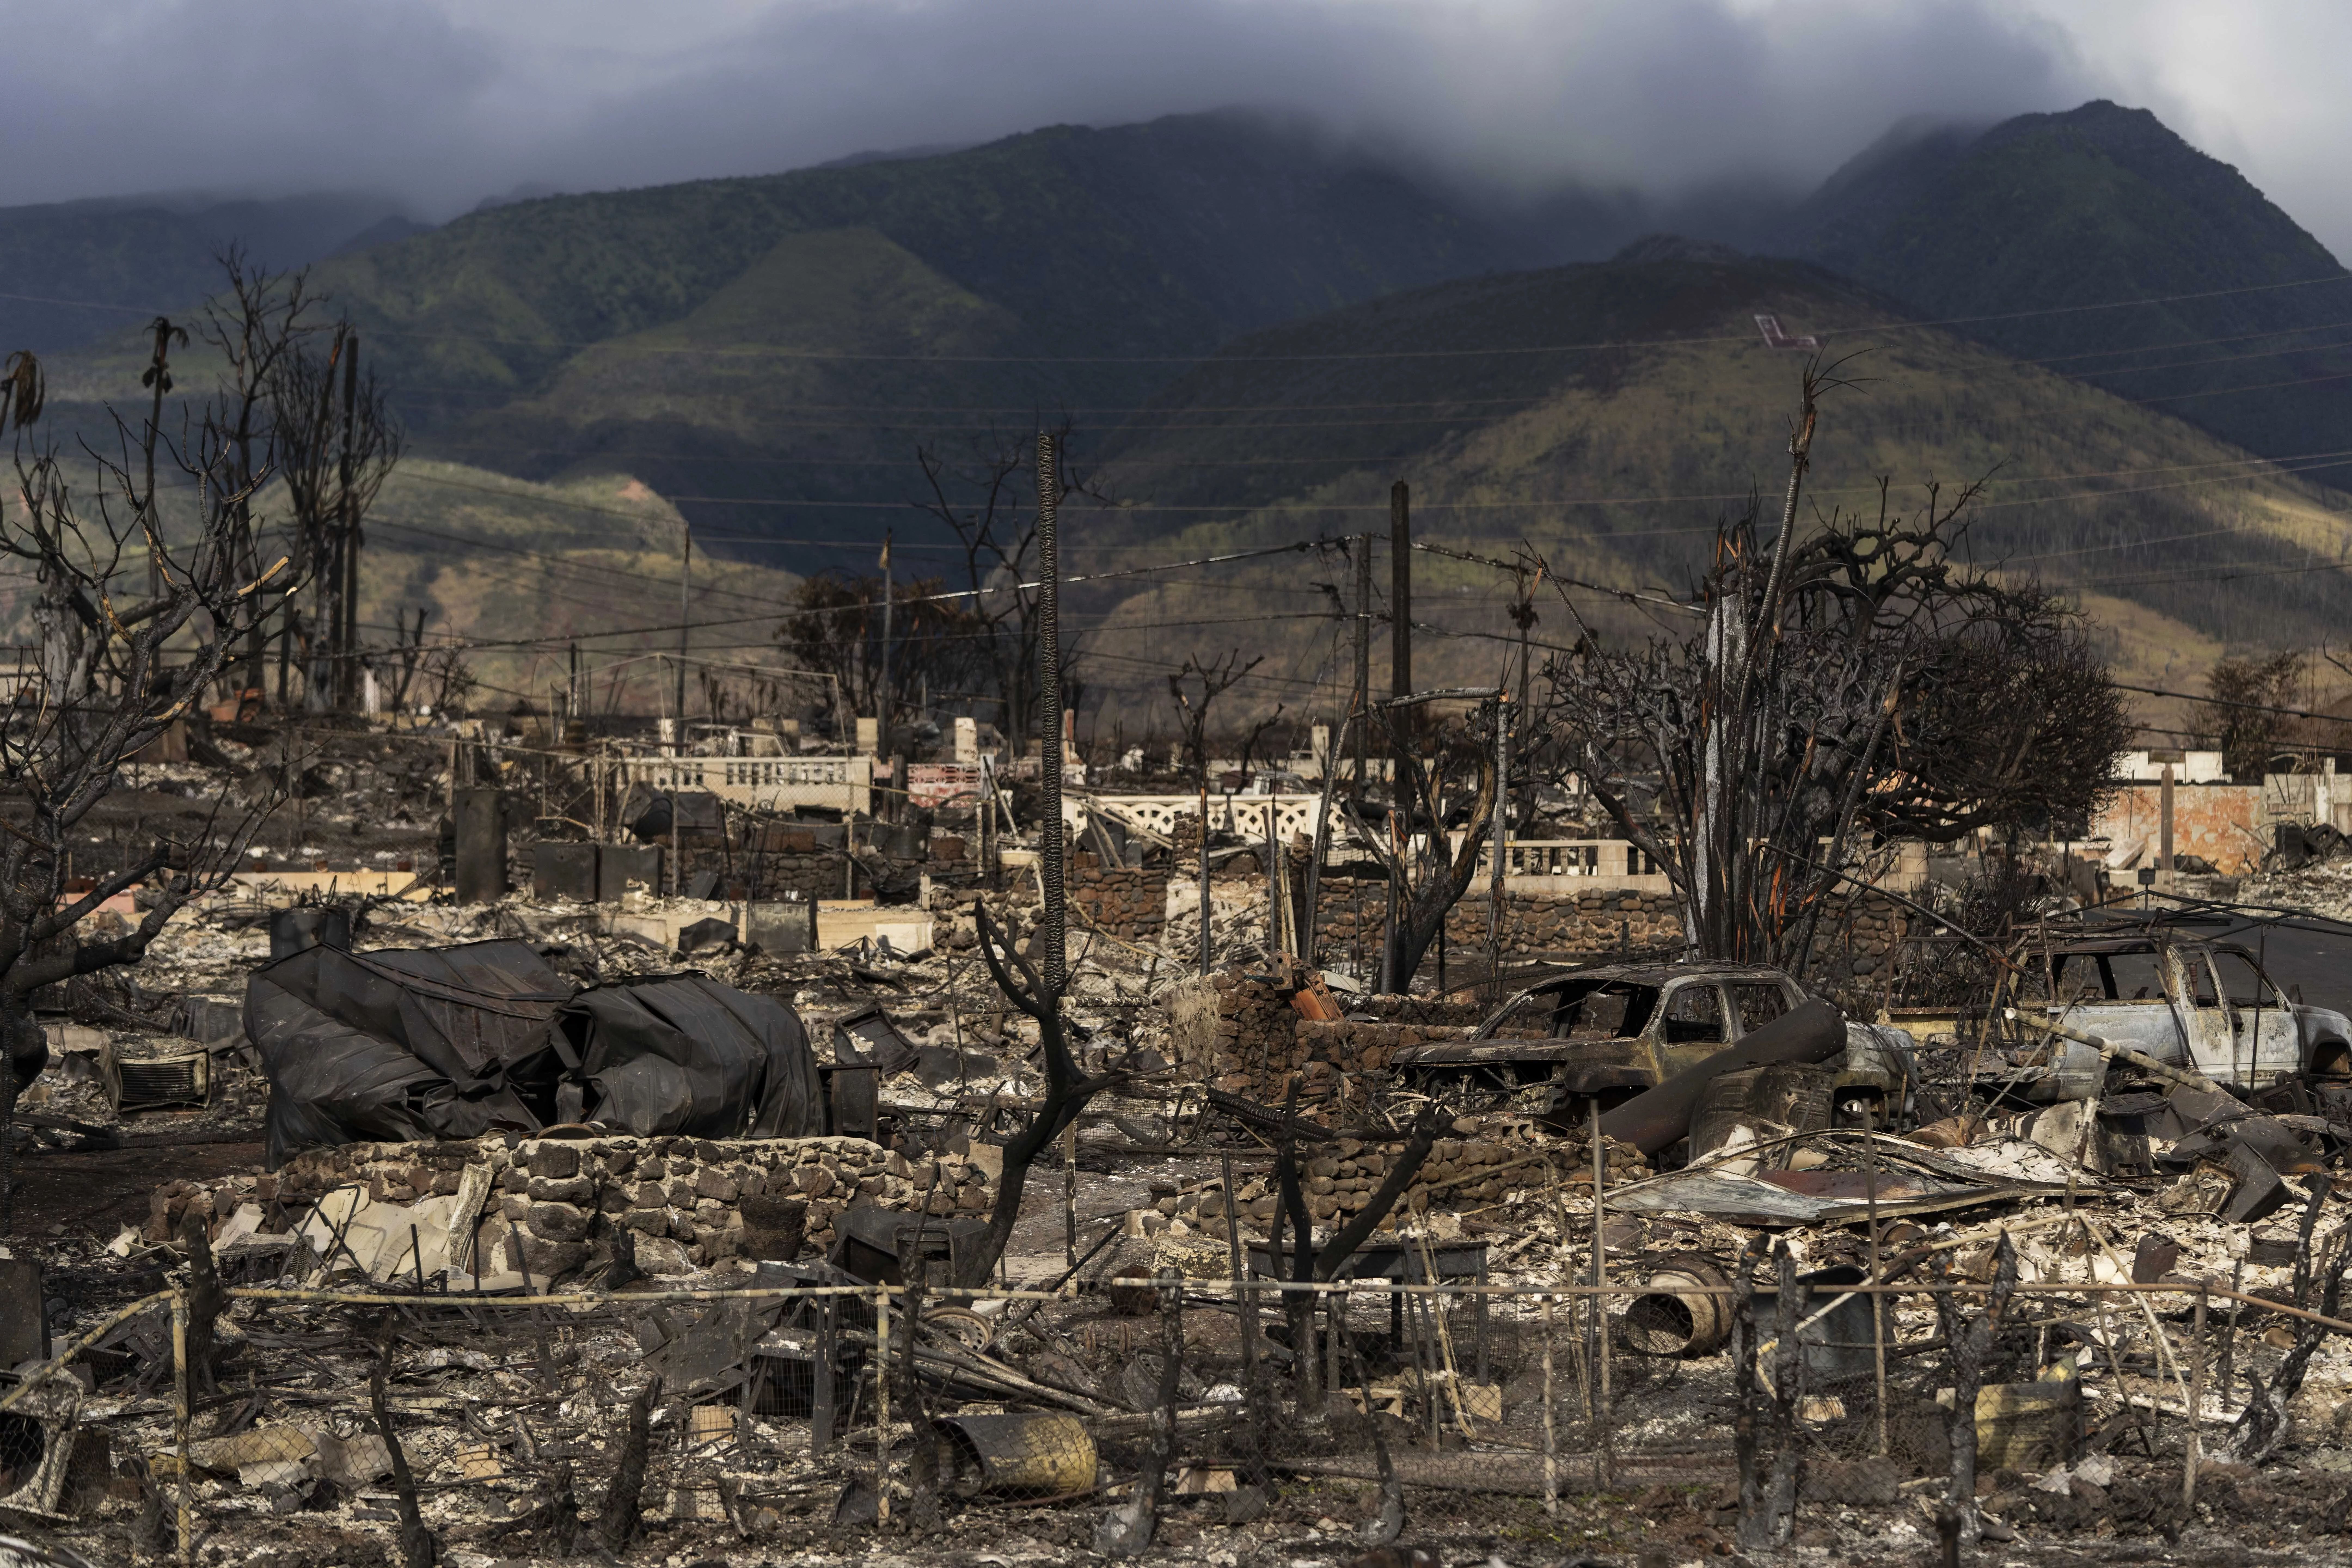 maui-wildfire-aftermath-ap-photo-jpg-3